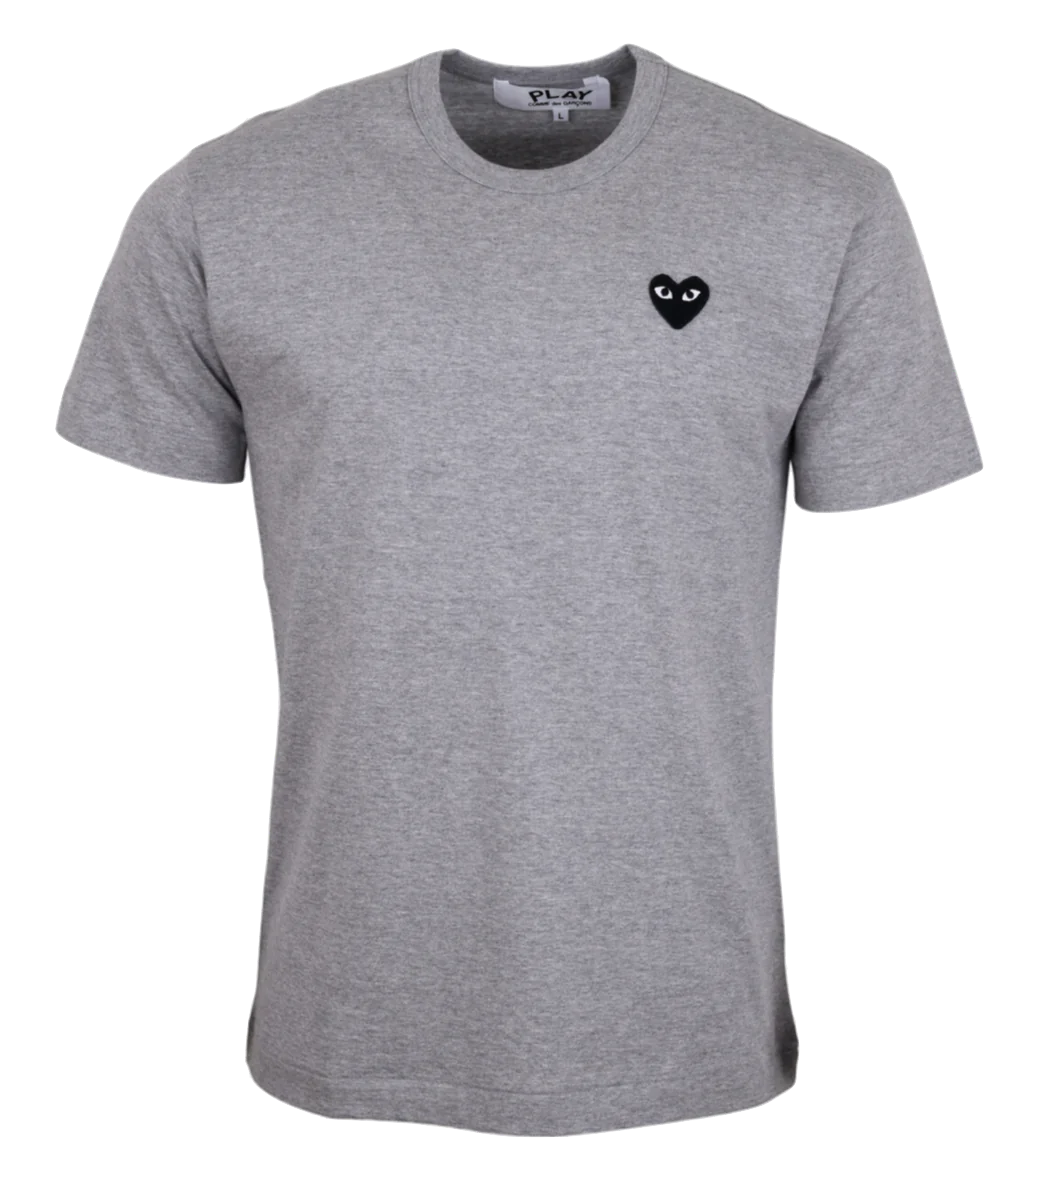 PLAY Men's T-shirt Black Heart